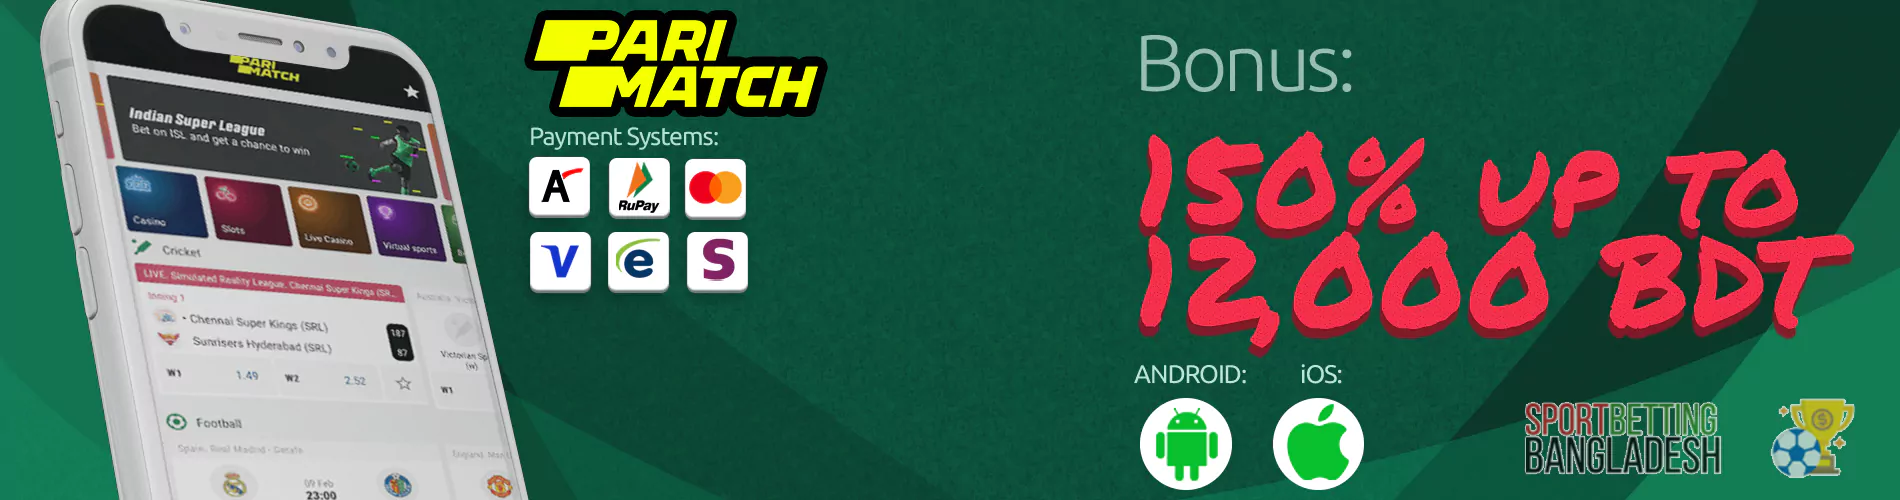 Parimatch Bangladesh app: payment systems, available platforms, welcome bonus.